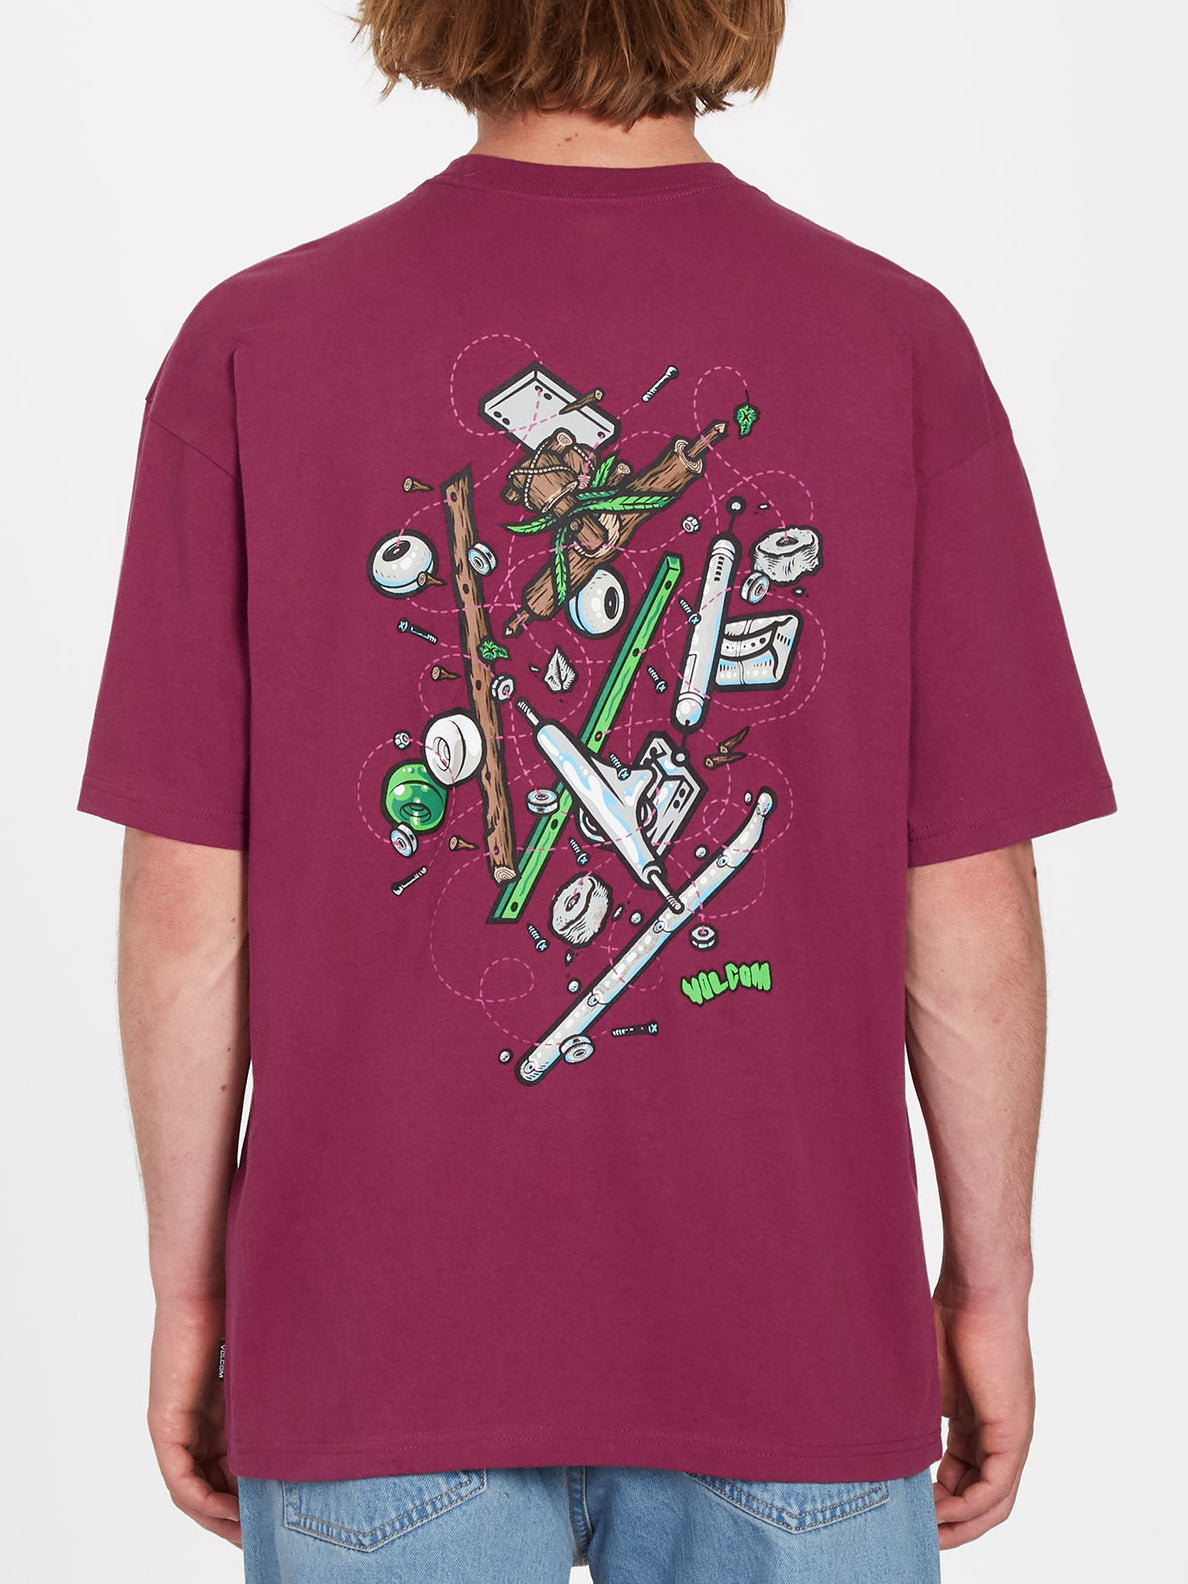 Camiseta Volcom Todd Bratrud SS Plum | Camisetas de hombre | Camisetas manga corta de hombre | Volcom Shop | surfdevils.com